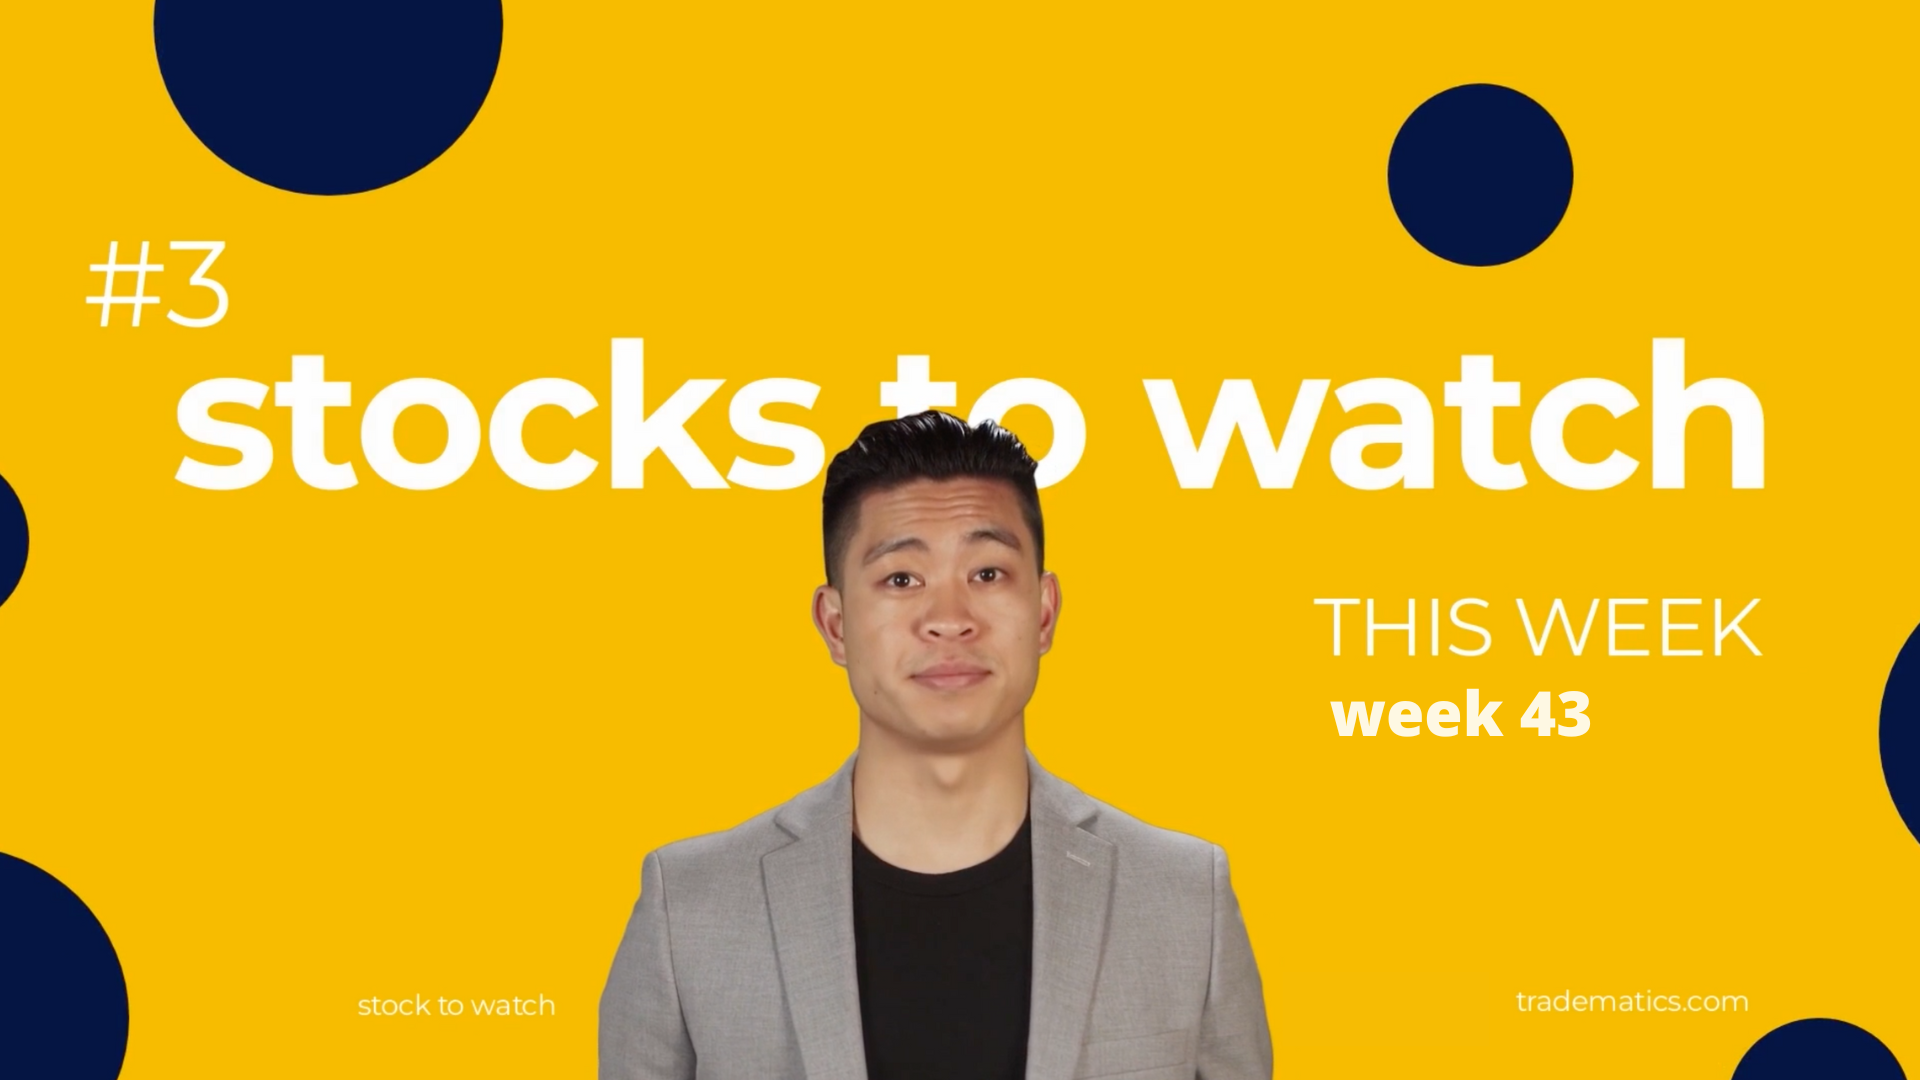 Tradematics | Stocks to Watch this week | week 43